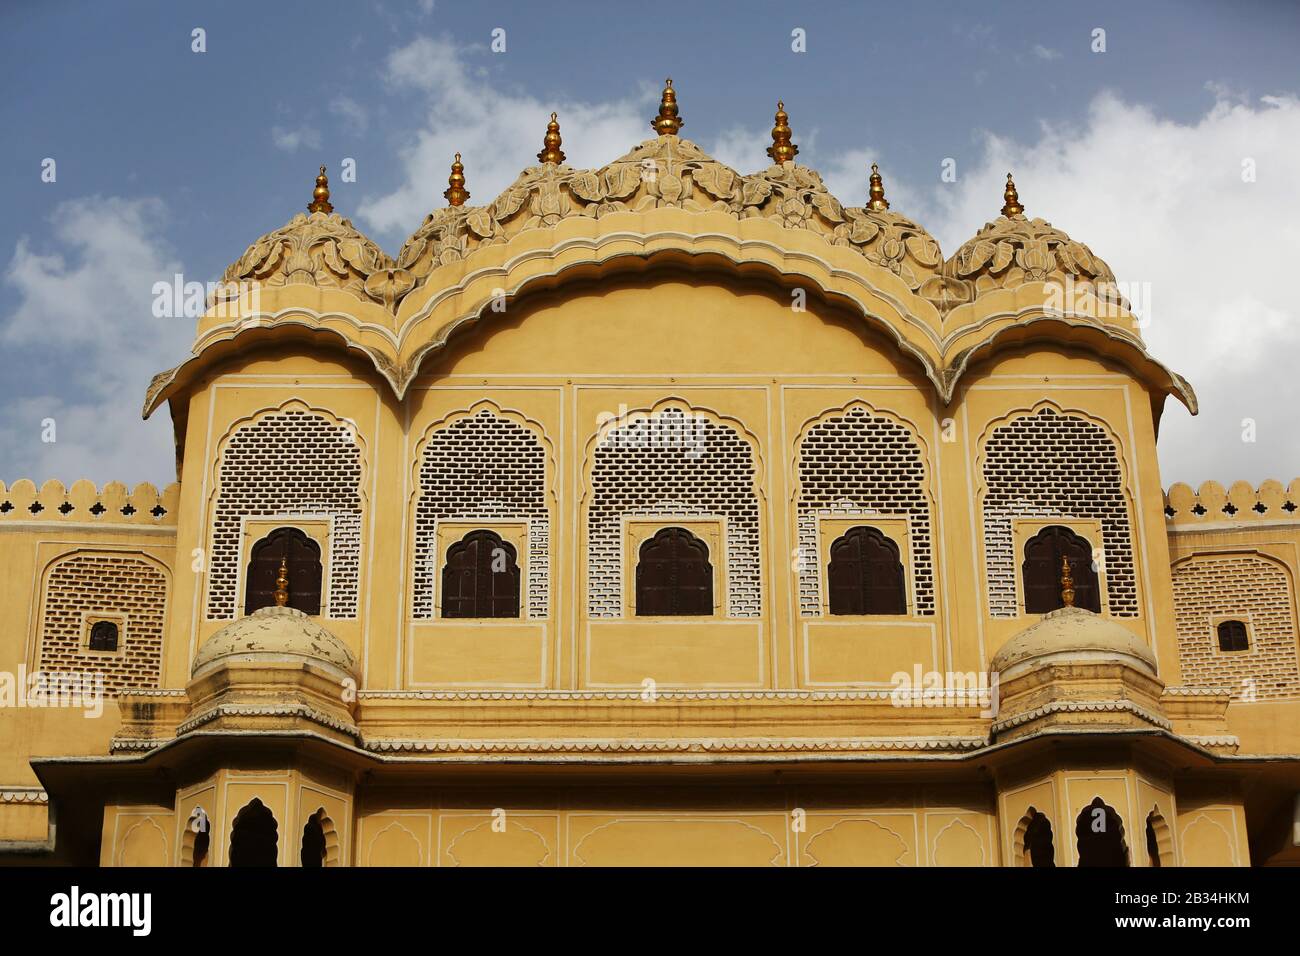 Palace of the Winds, Hawa Mahal, Jaipur, Rajasthan, India Stock Photo -  Alamy